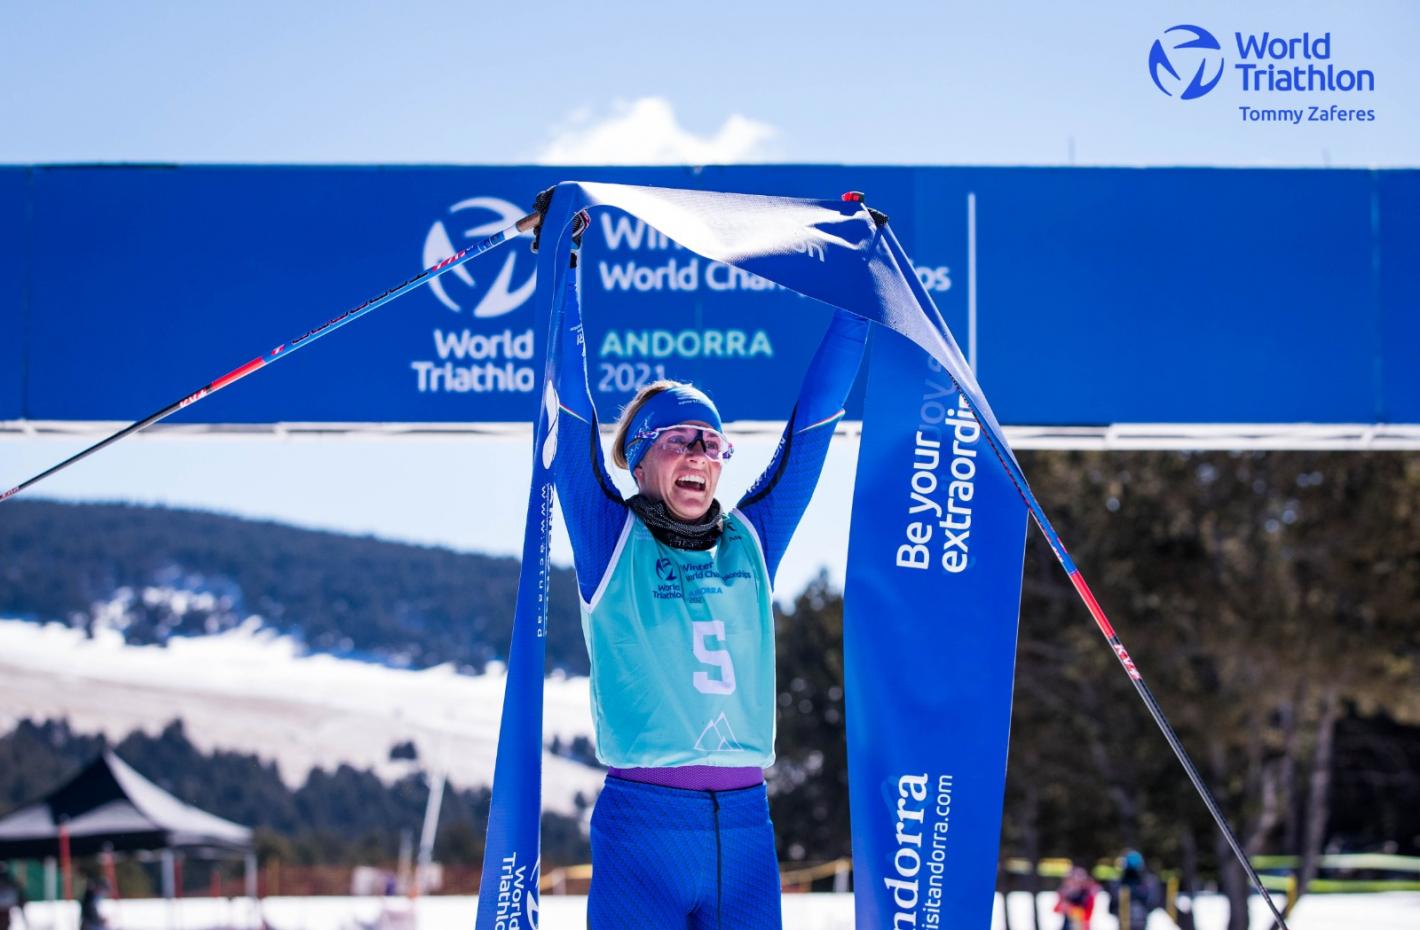 images/2021/Gare_INTERNAZIONALI/Mondiali_Winter_Triathlon_Andorra/medium/88c687ae-7dd0-4efd-9d56-81806abd620b.jpg